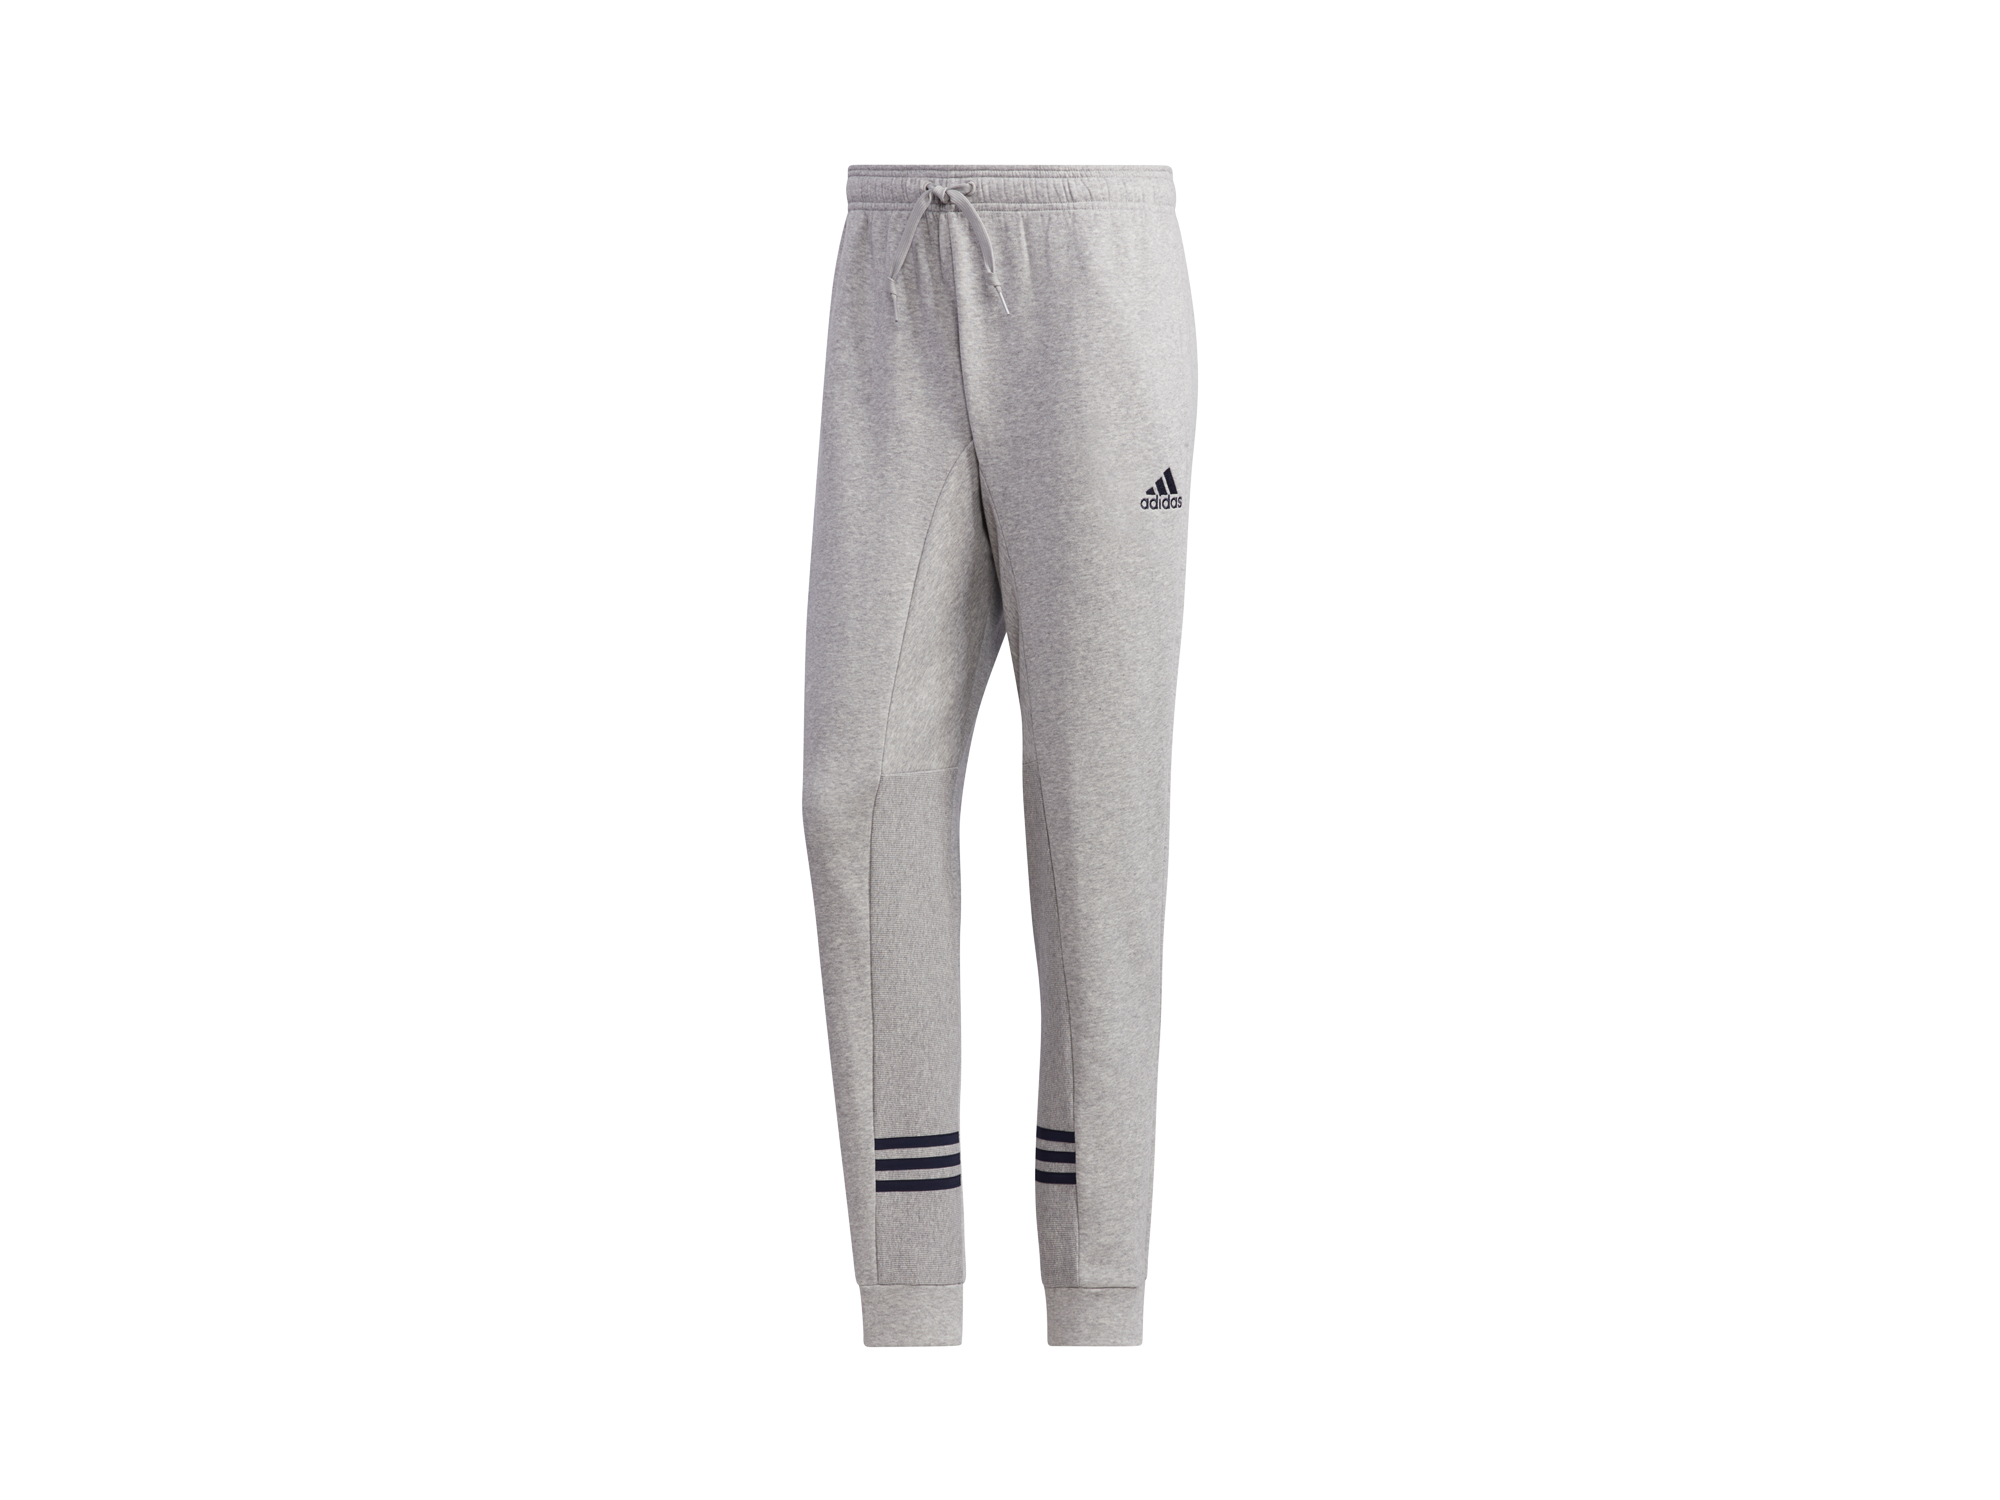 Adidas Originals Essentials Comfort Pants